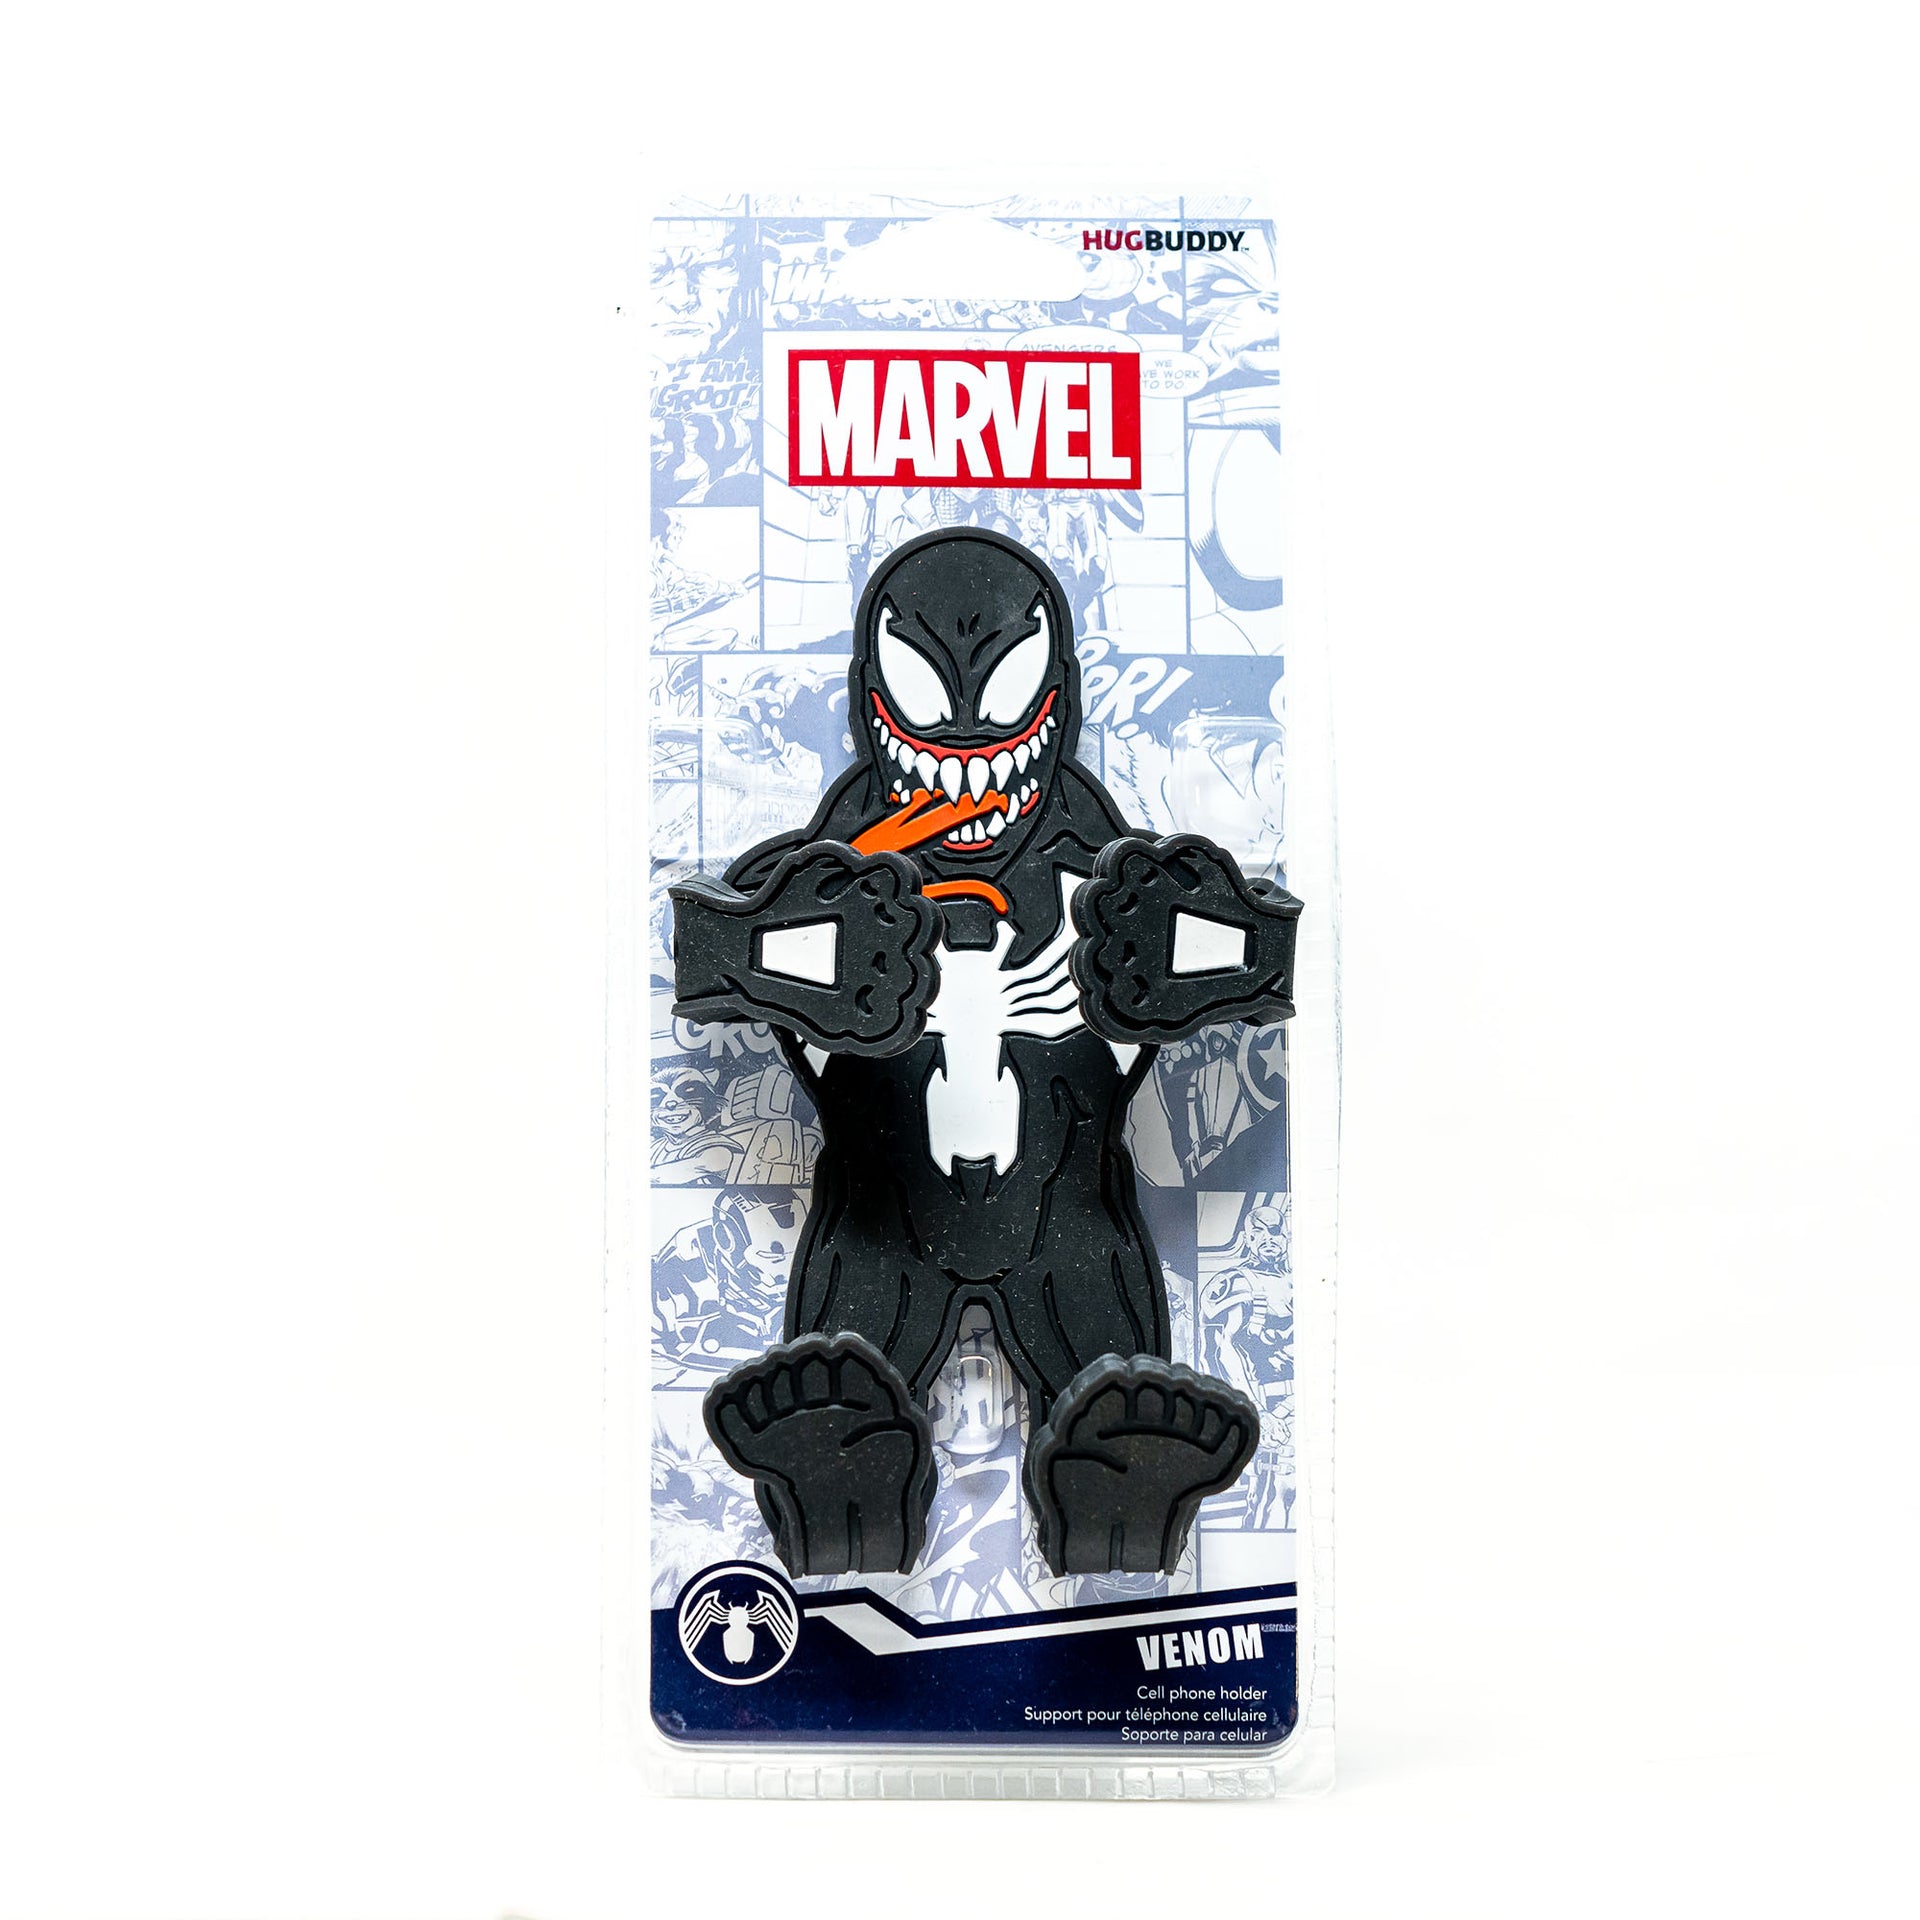 Image of Marvel Comics Venom Hug Buddy packaging front view